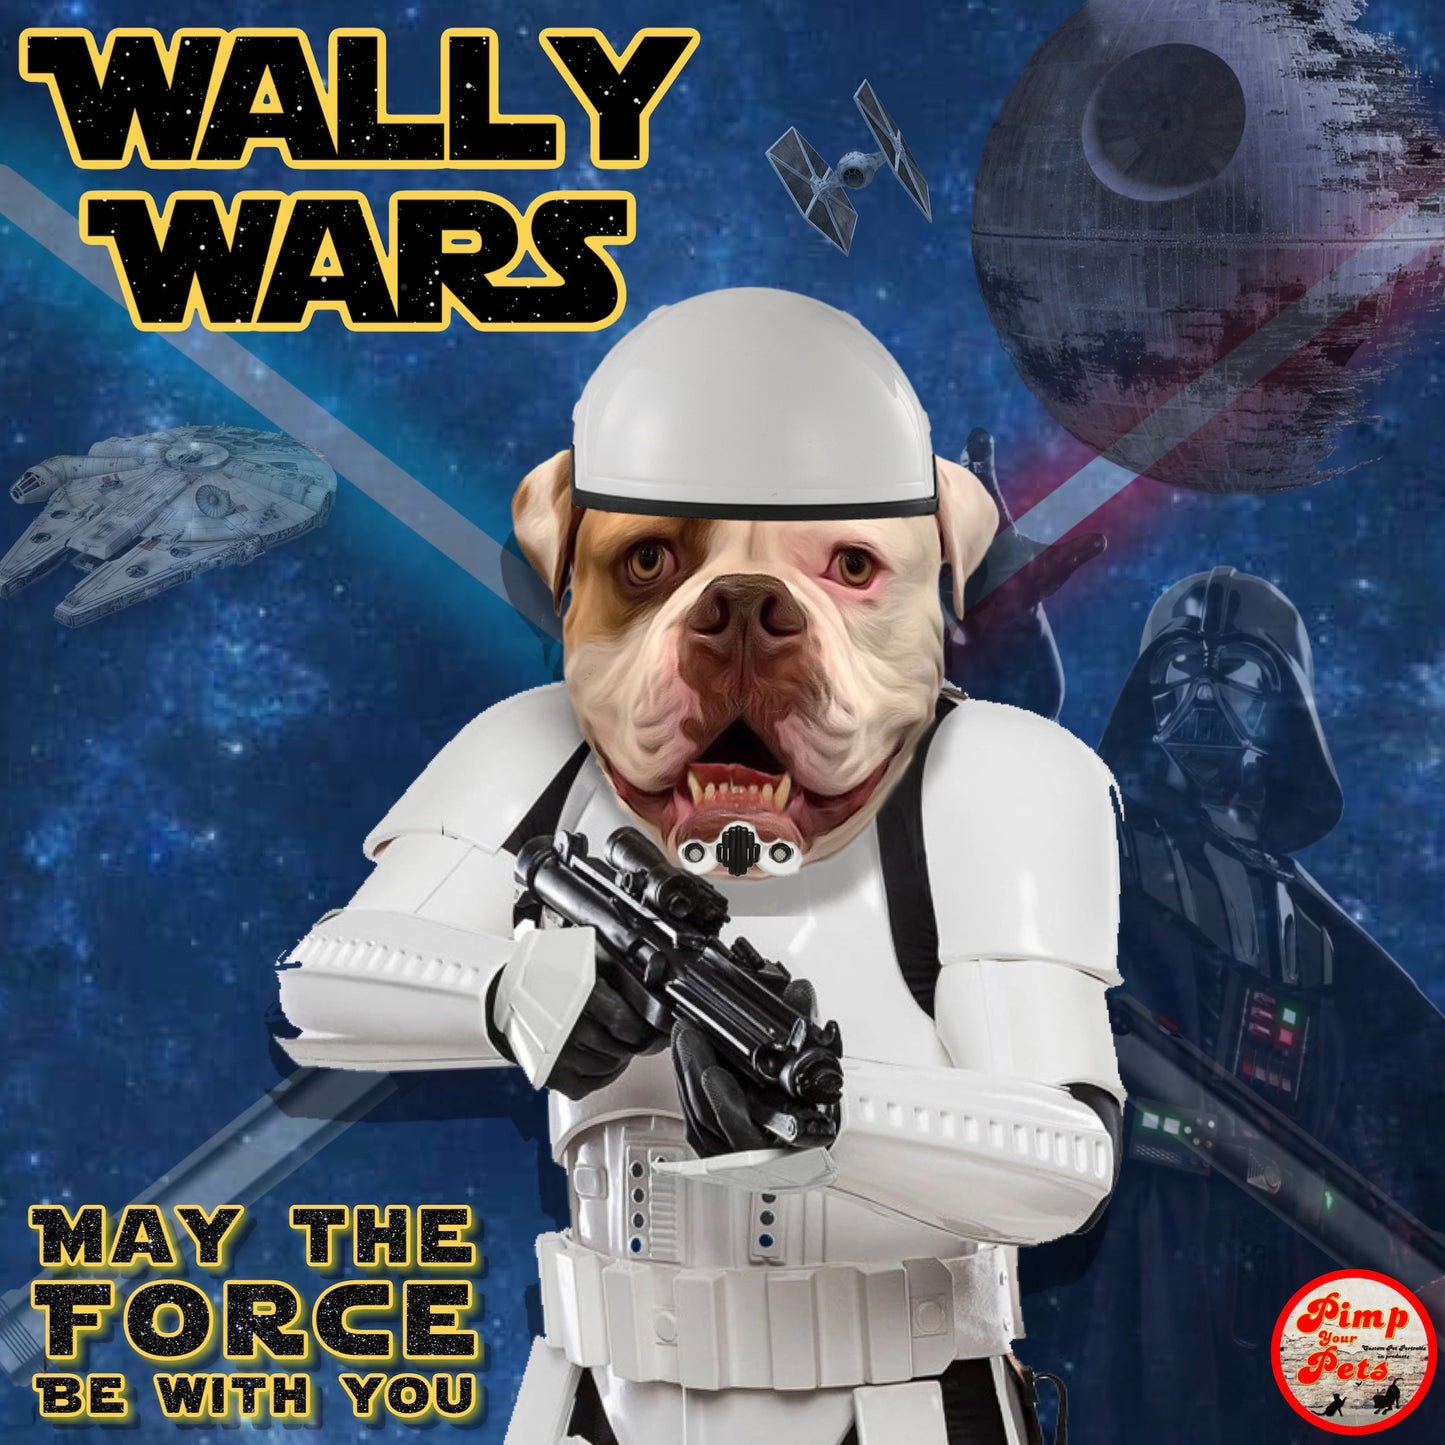 Storm trooper style star wars